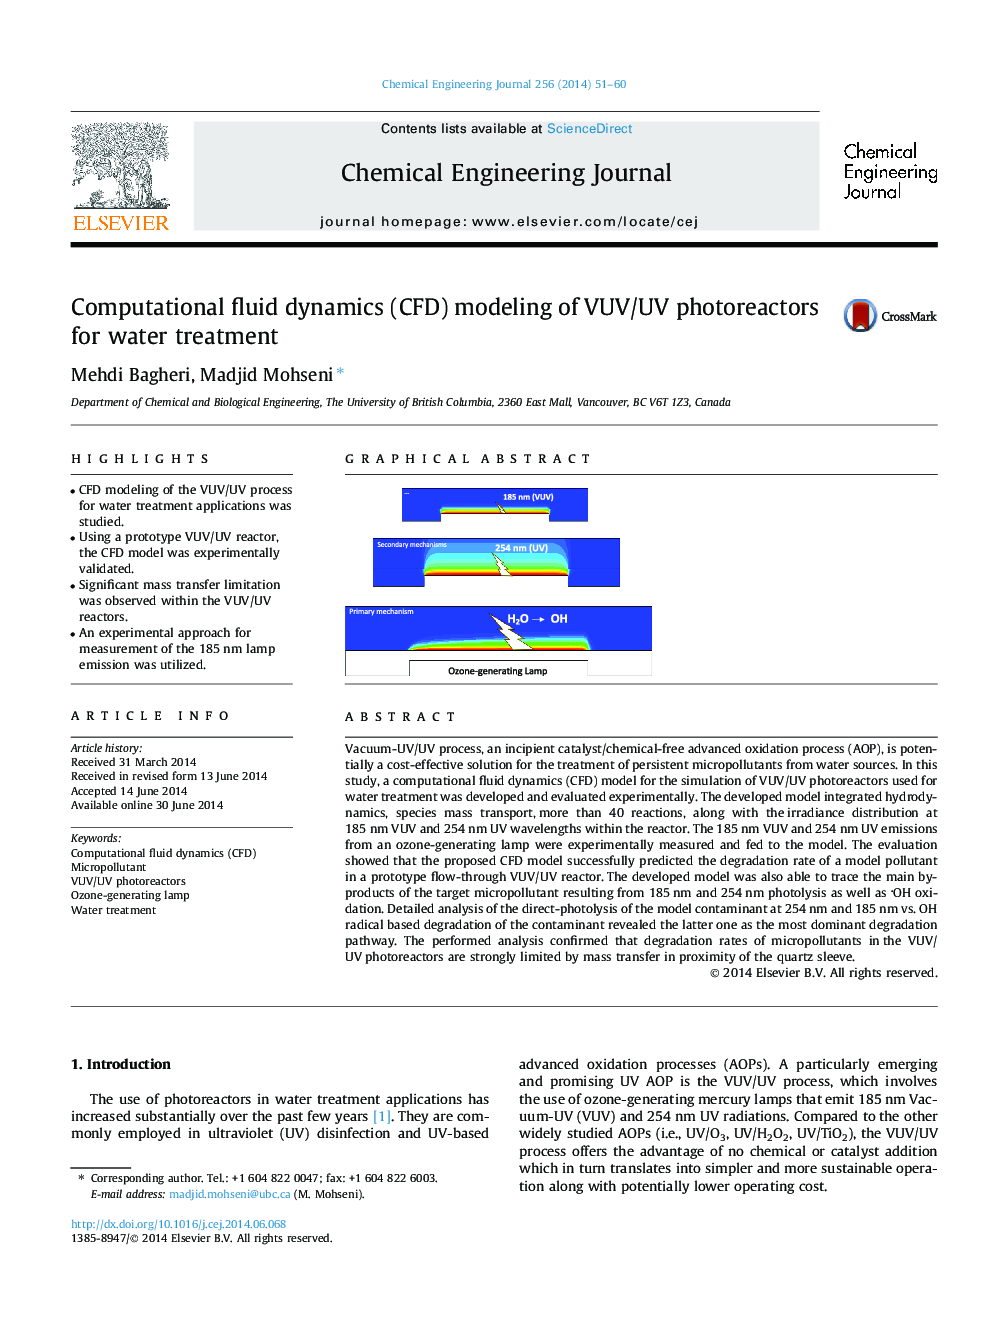 Computational fluid dynamics (CFD) modeling of VUV/UV photoreactors for water treatment